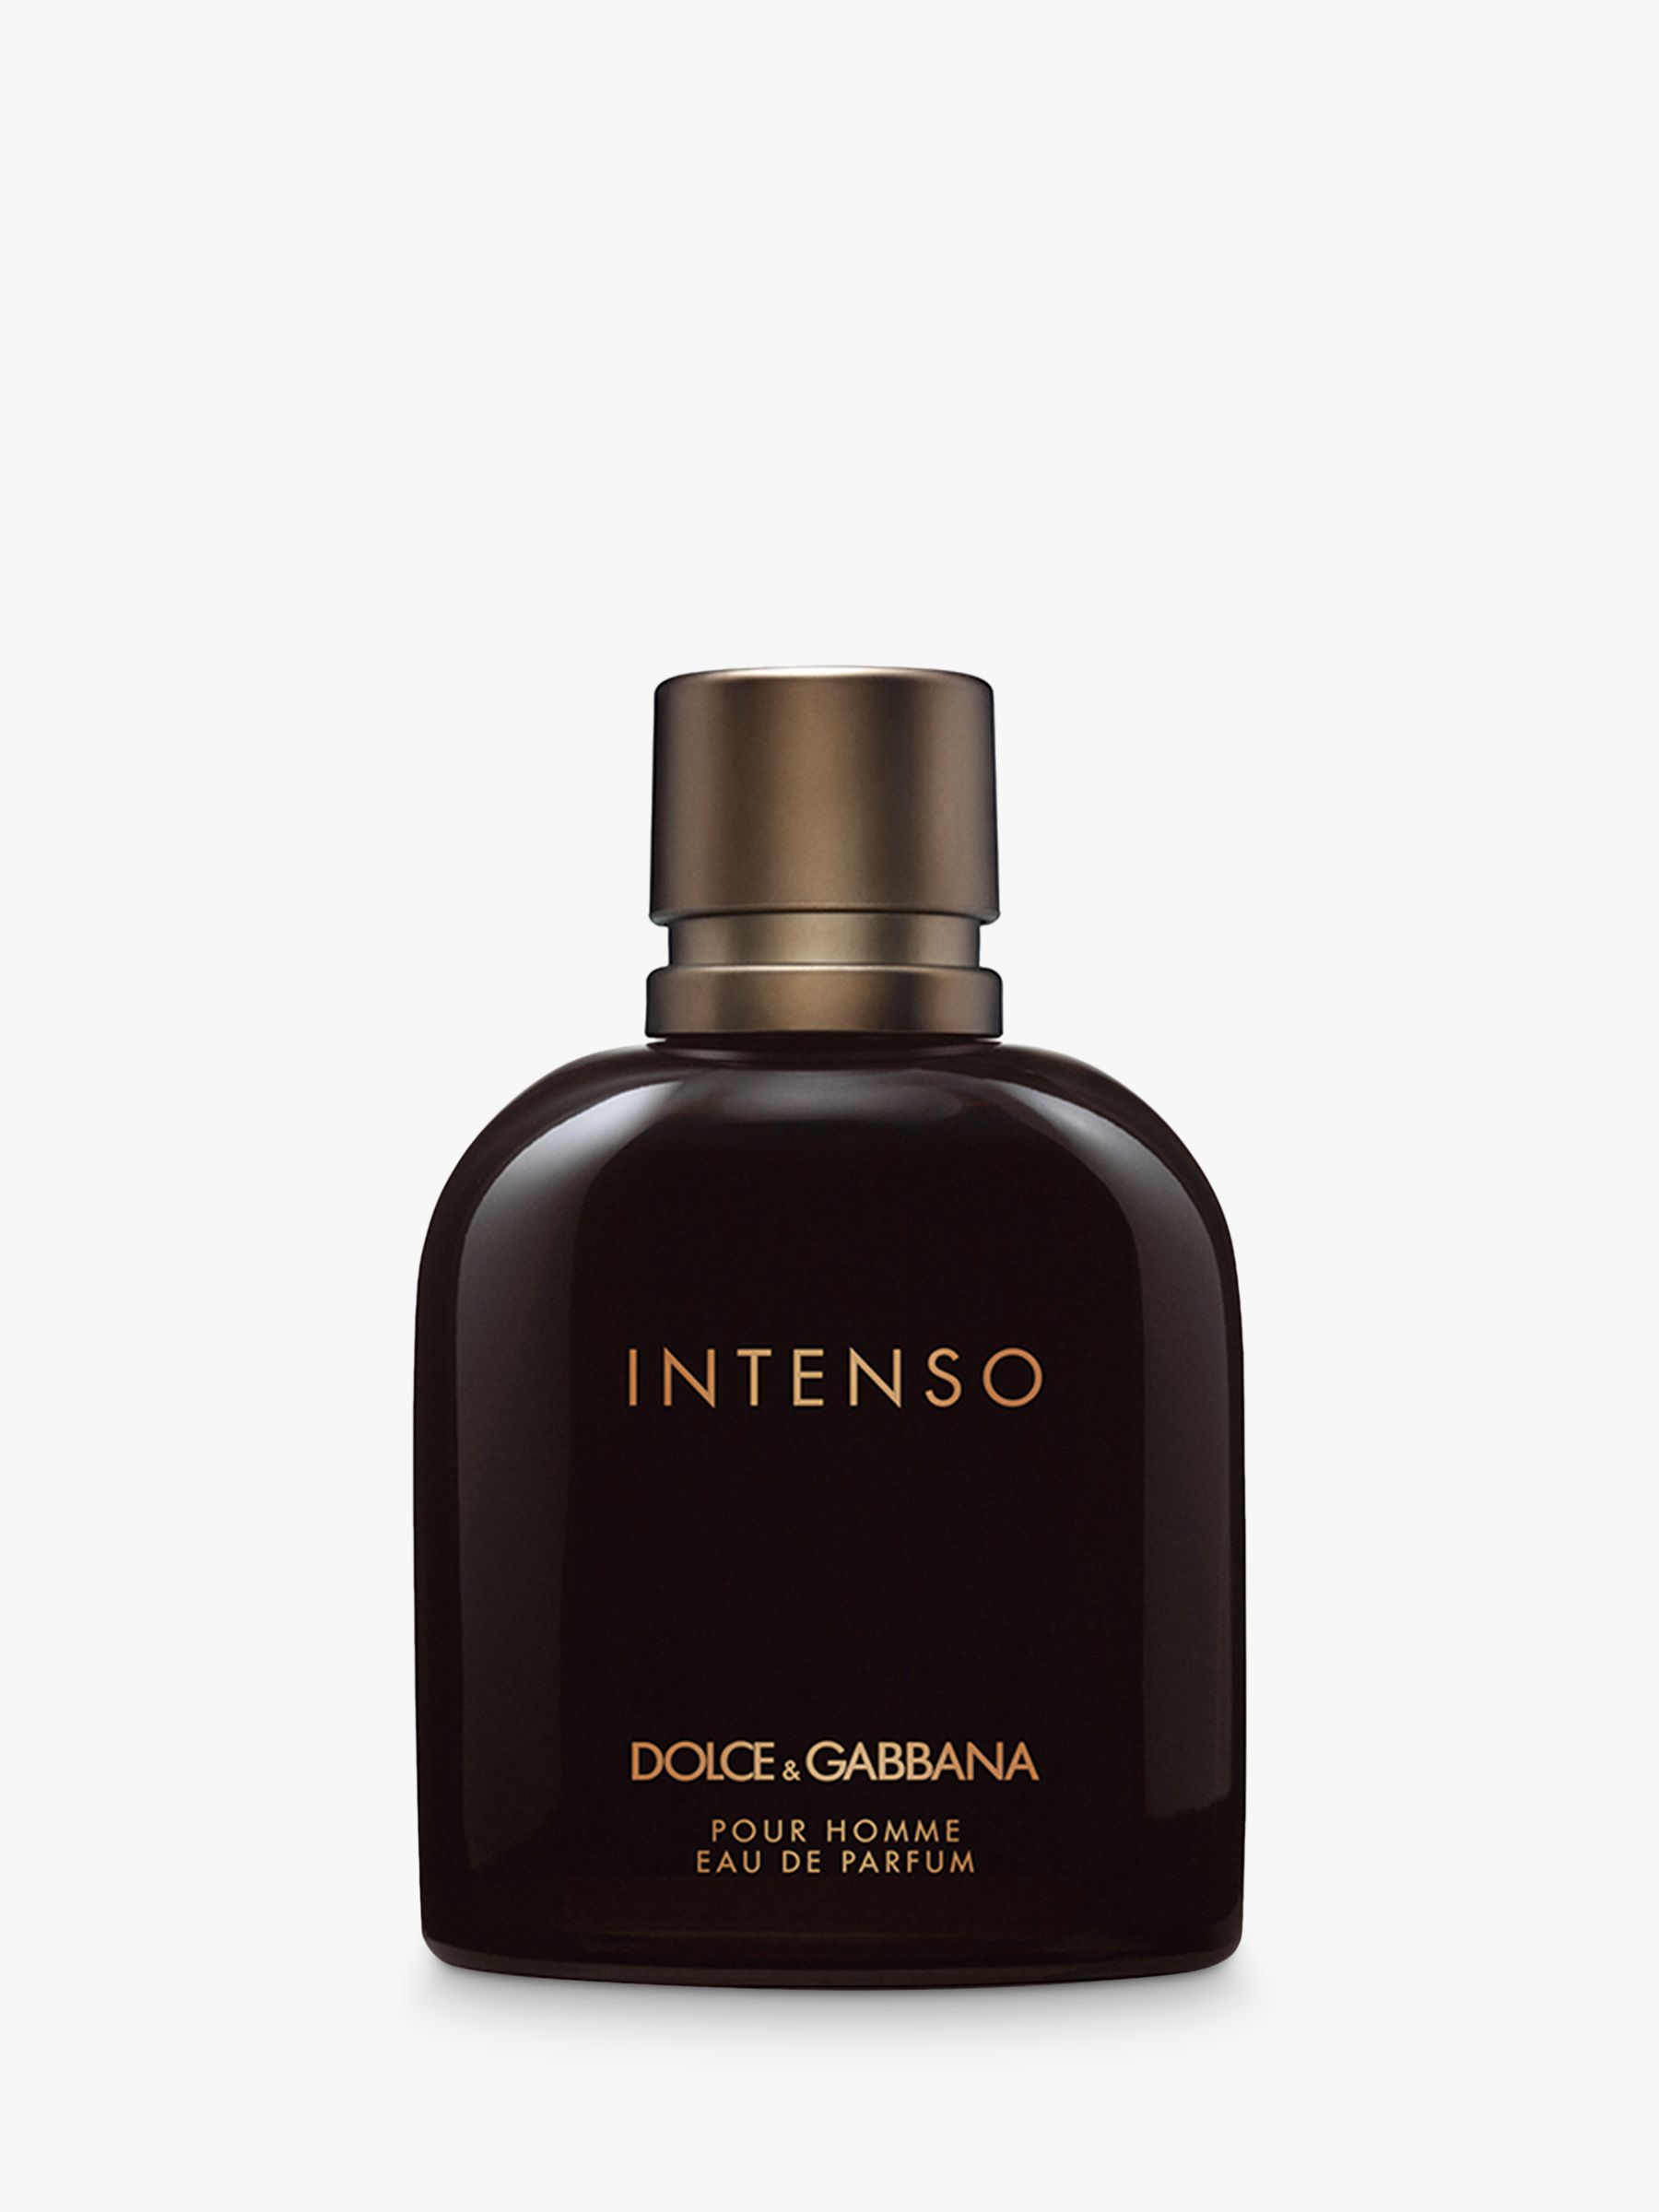 Dolce And Gabbana Intenso Pour Homme Eau De Parfum At John Lewis And Partners